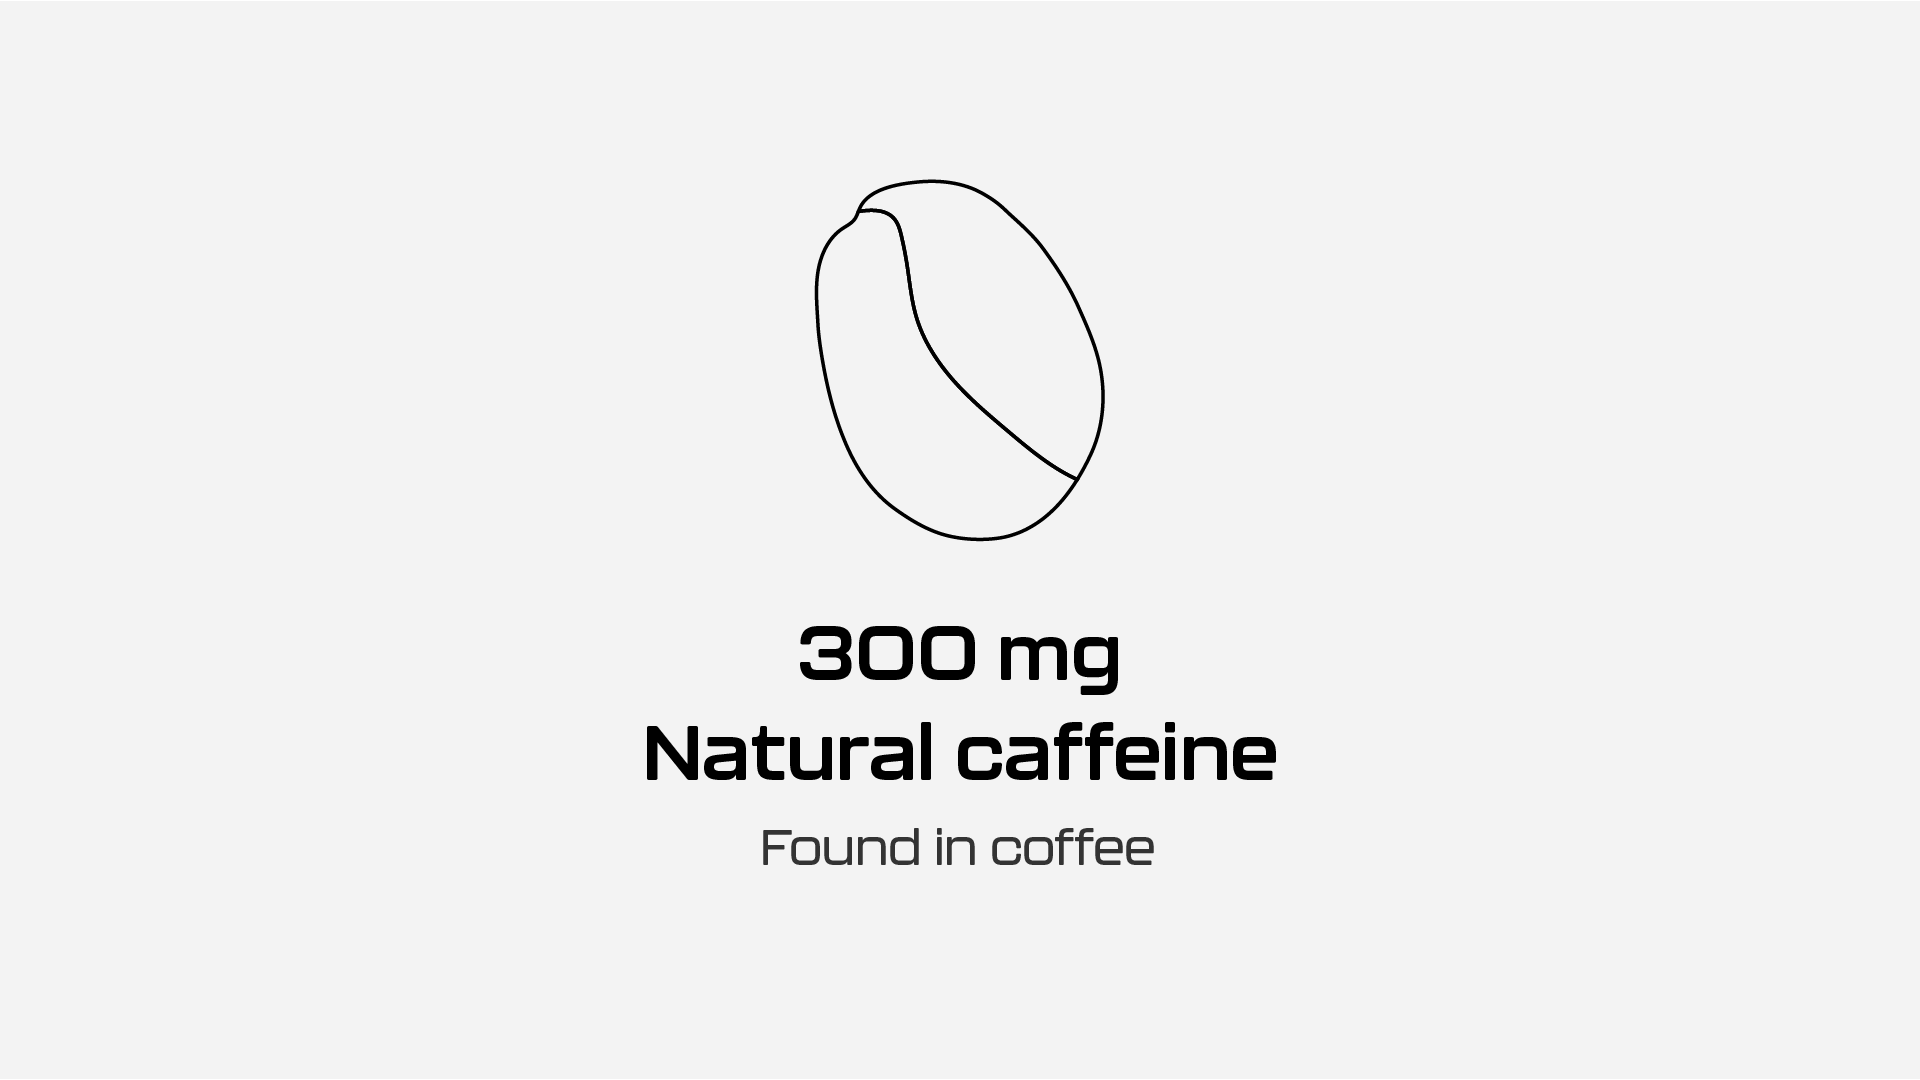 Image of natural caffeine ingredient